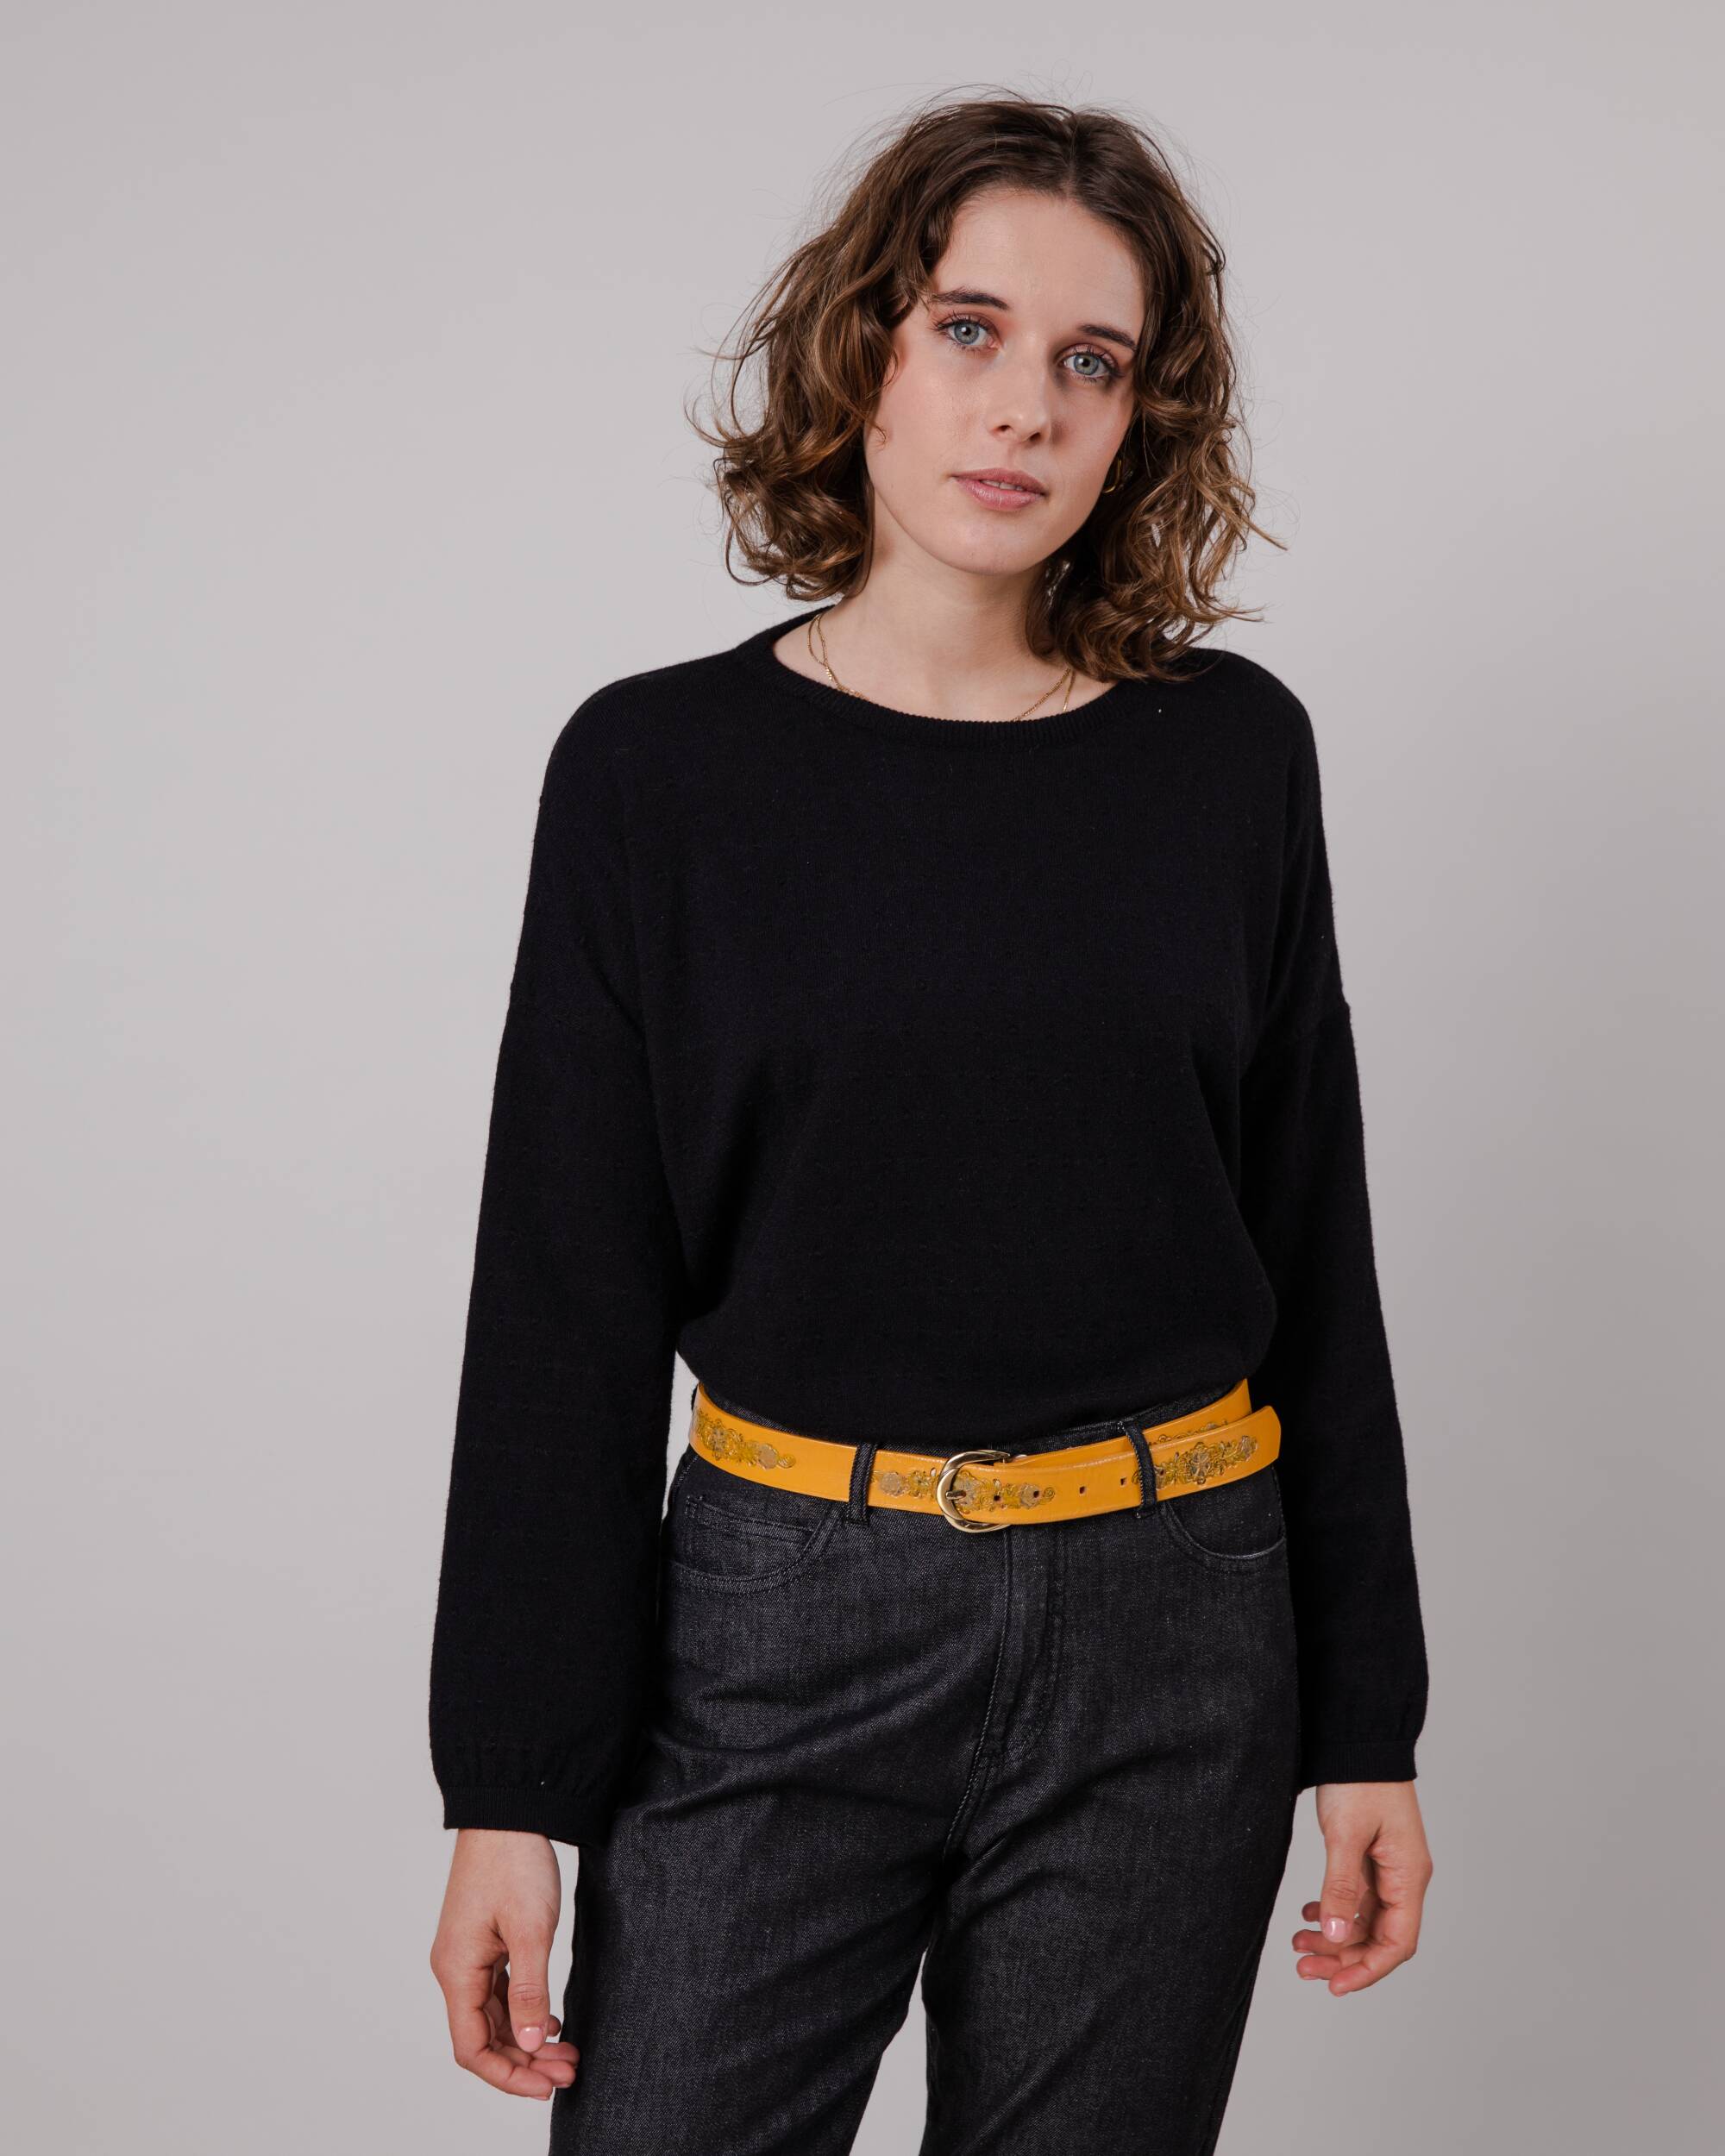 Black sweater made of Livaeco viscose, polyester and polyamide from Brava Fabrics